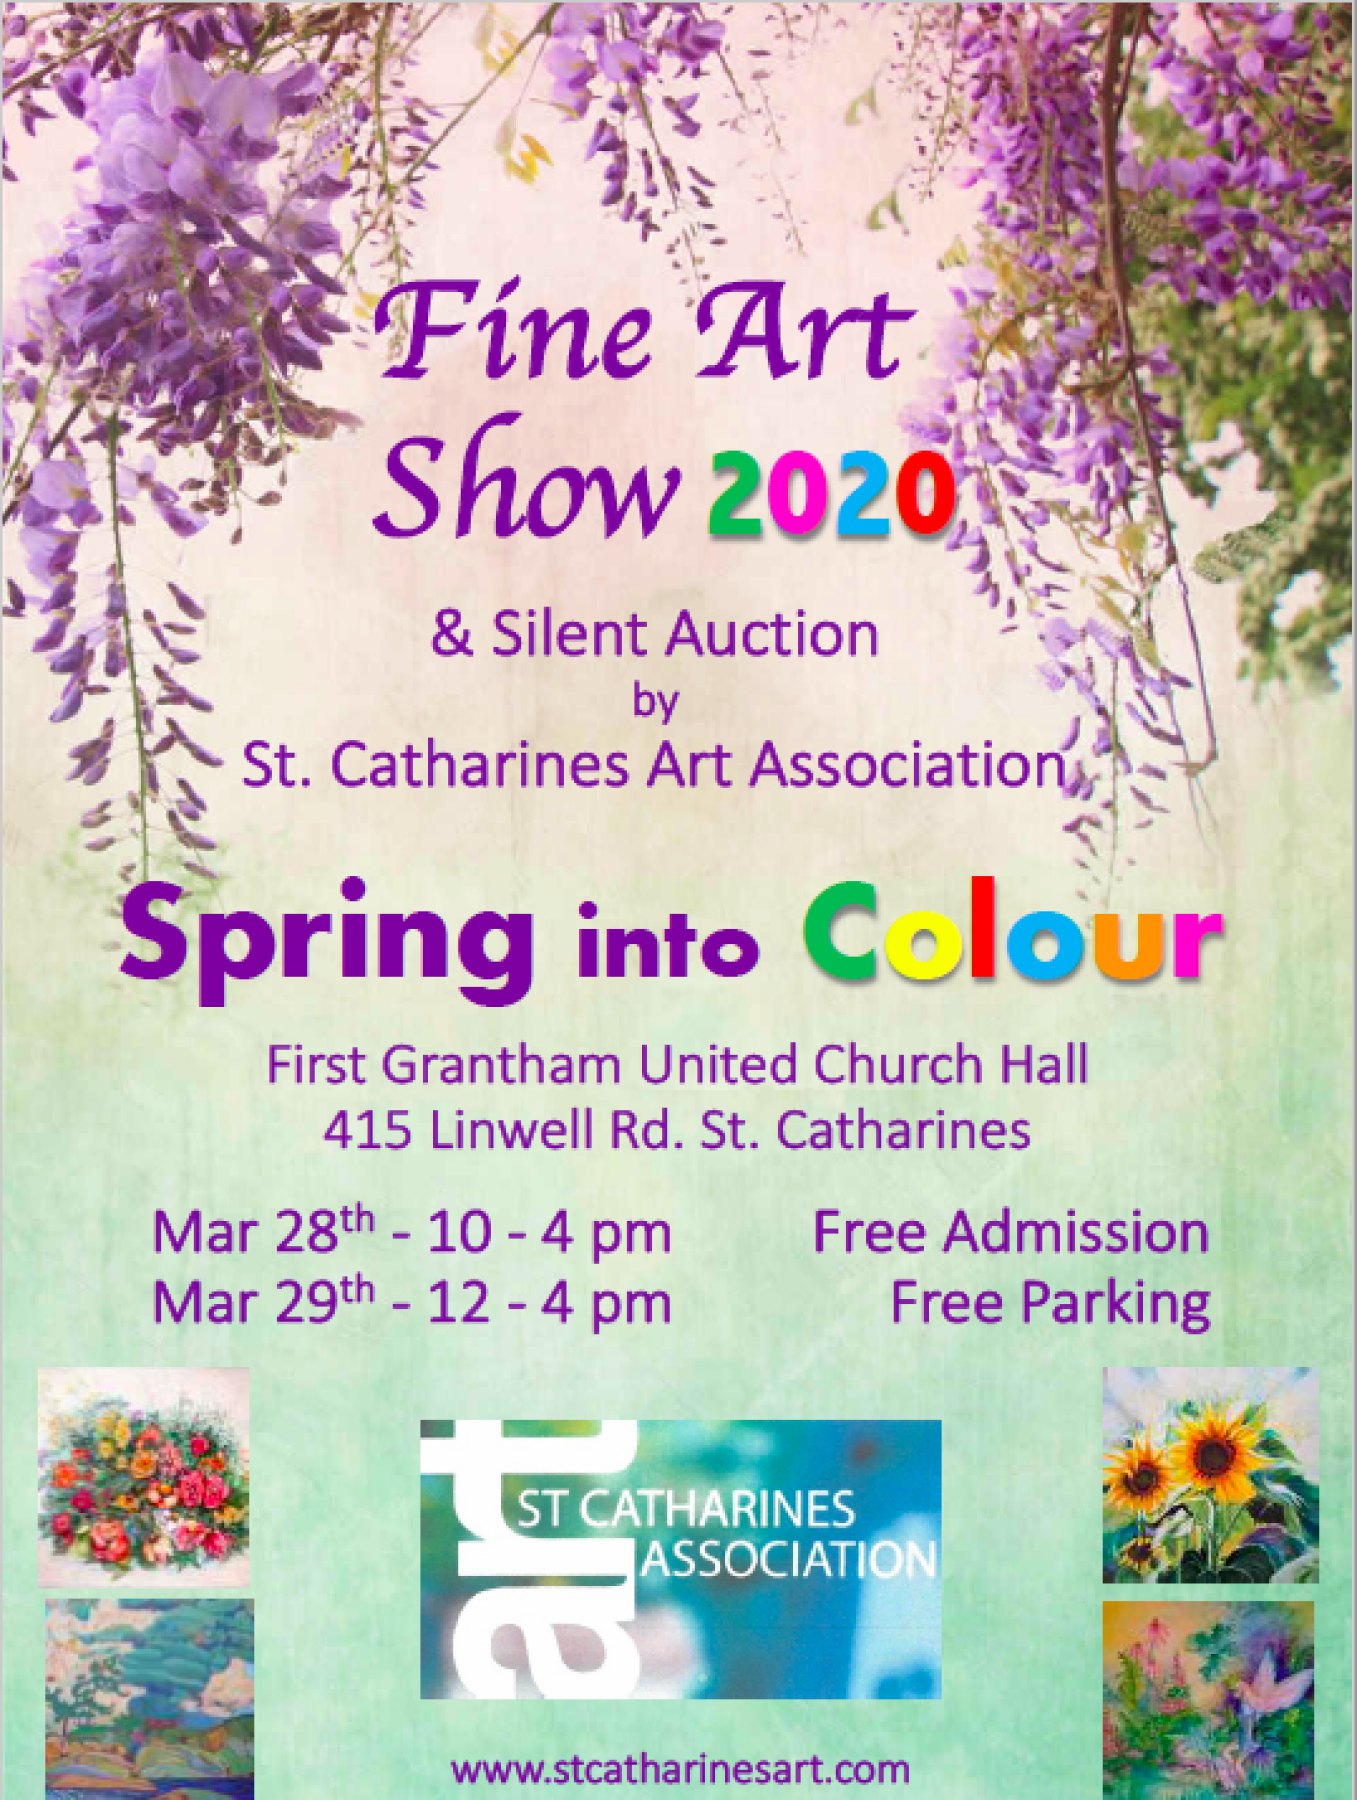 Spring into Colour Fine Art Show, 2020 - share on social media!